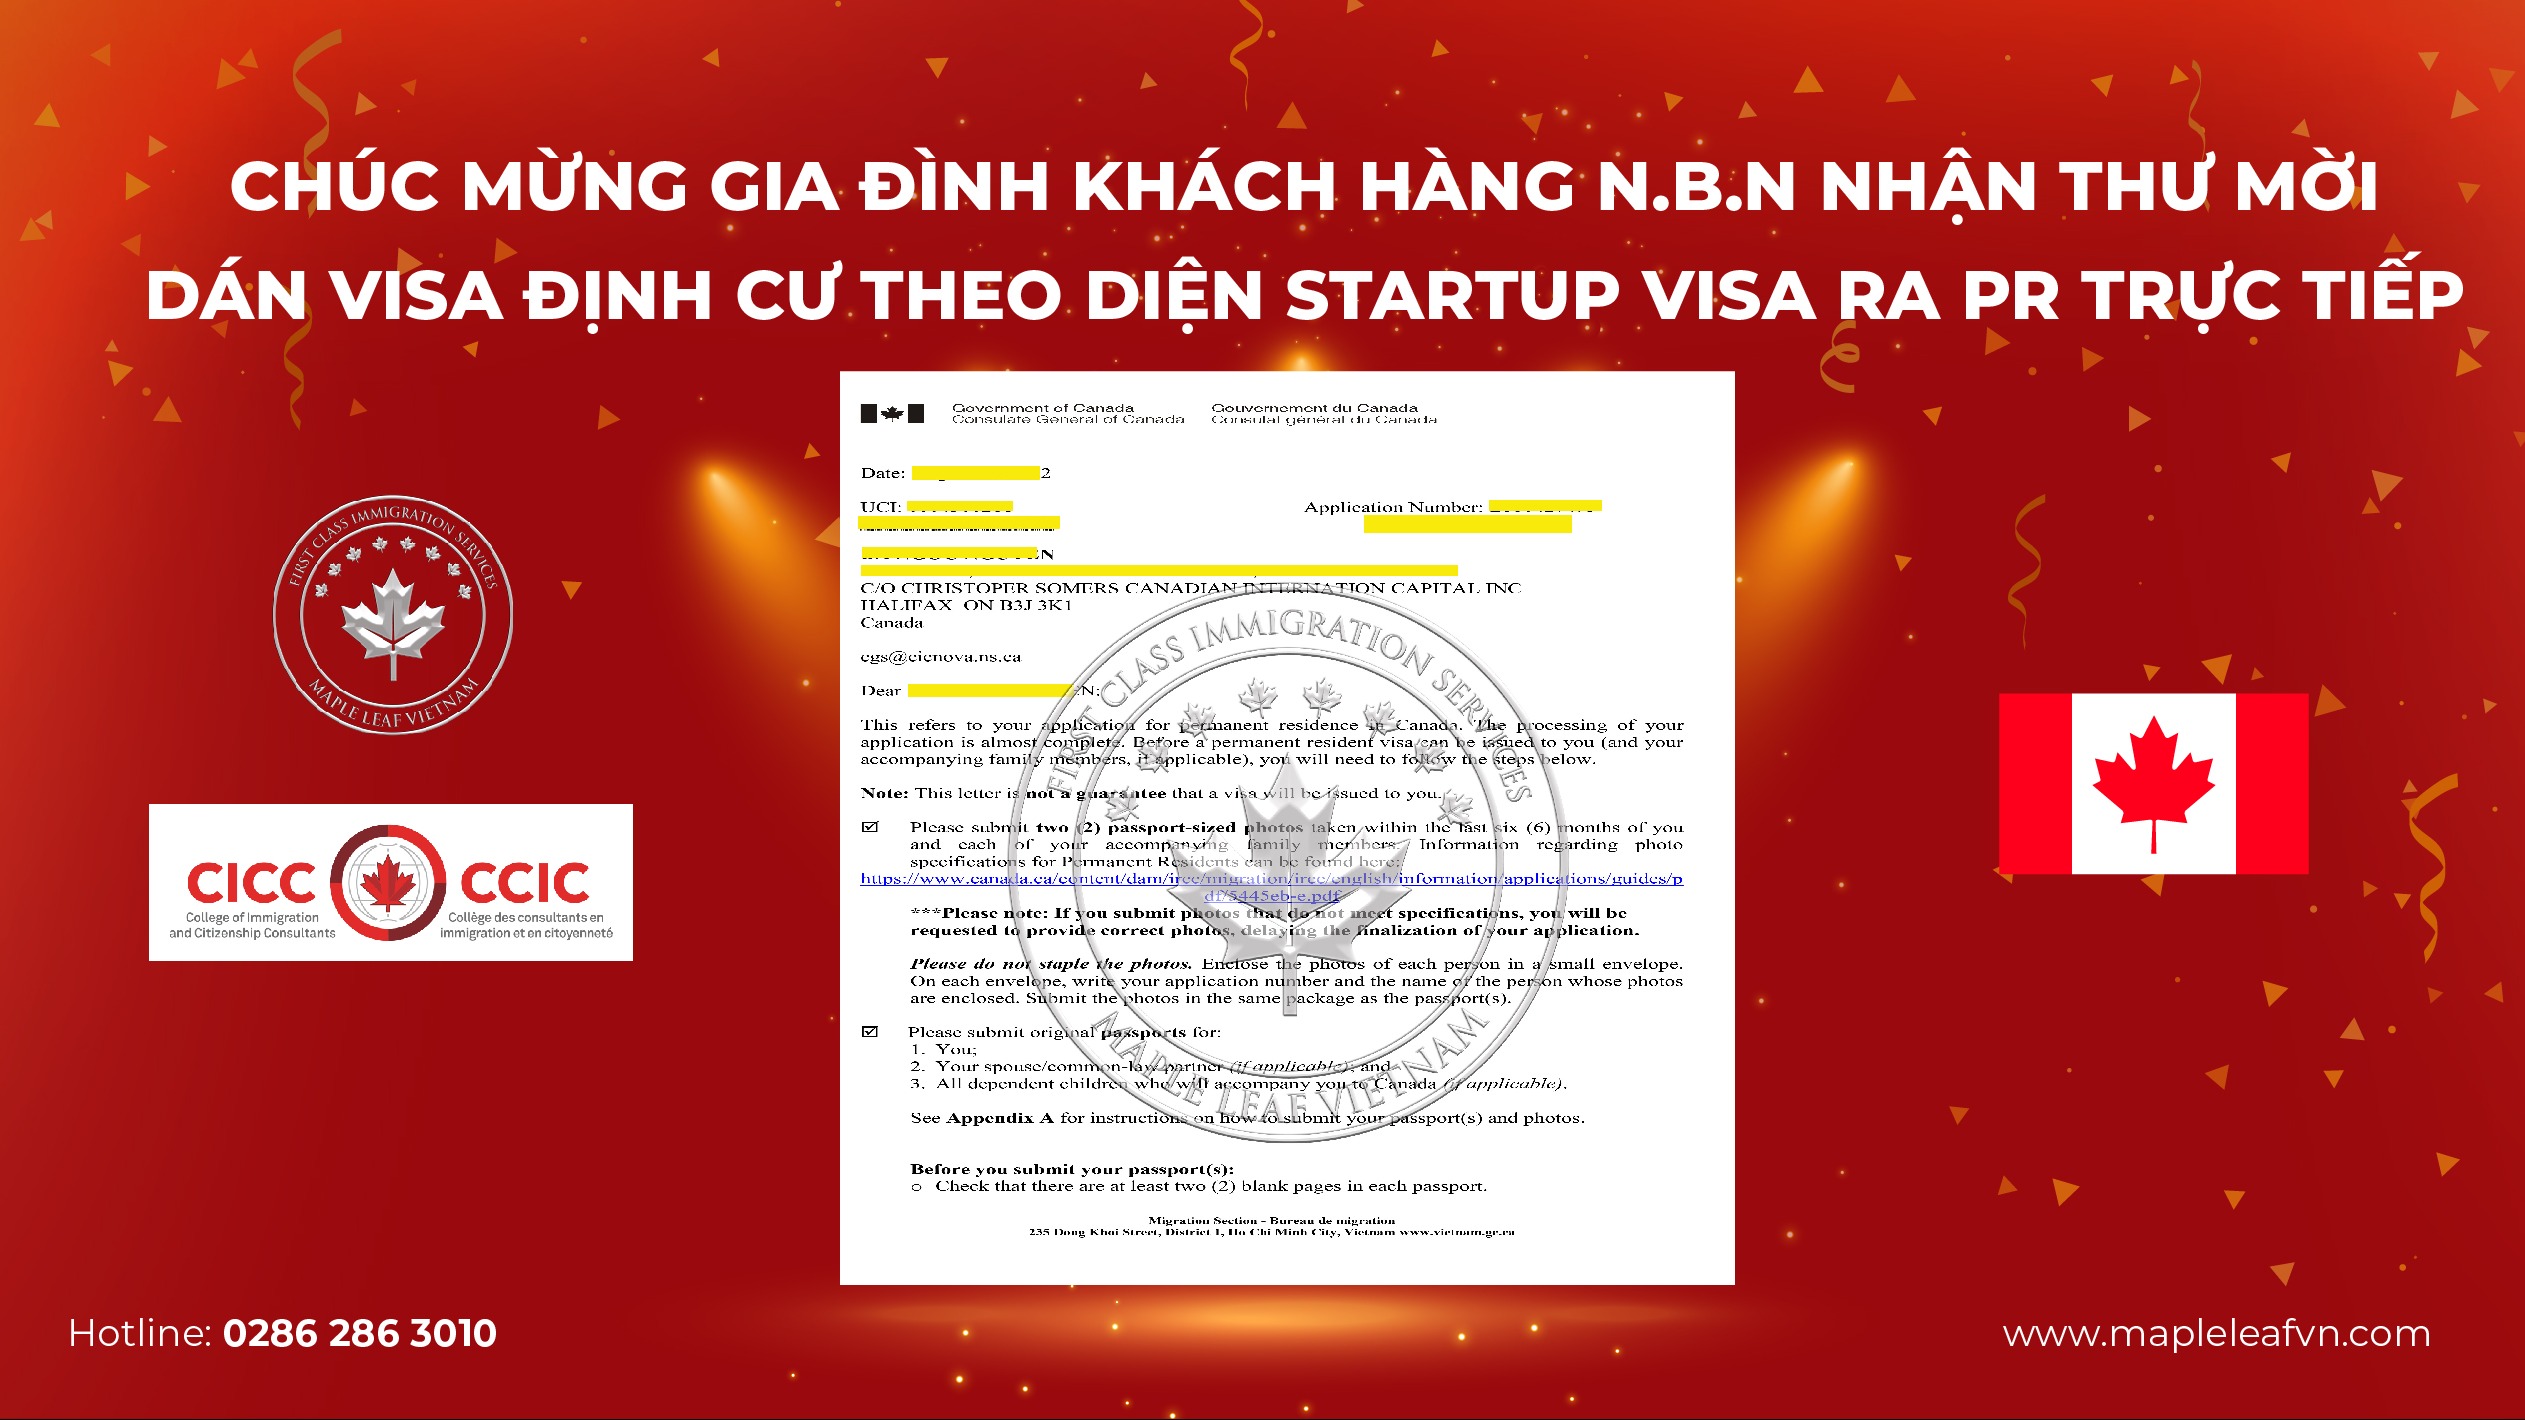 chuc-mung-gia-dinh-khach-hang-nbn-nhan-thu-moi-dan-visa-dinh-cu-theo-dien-startup-visa-nhan-pr-truc-tiep